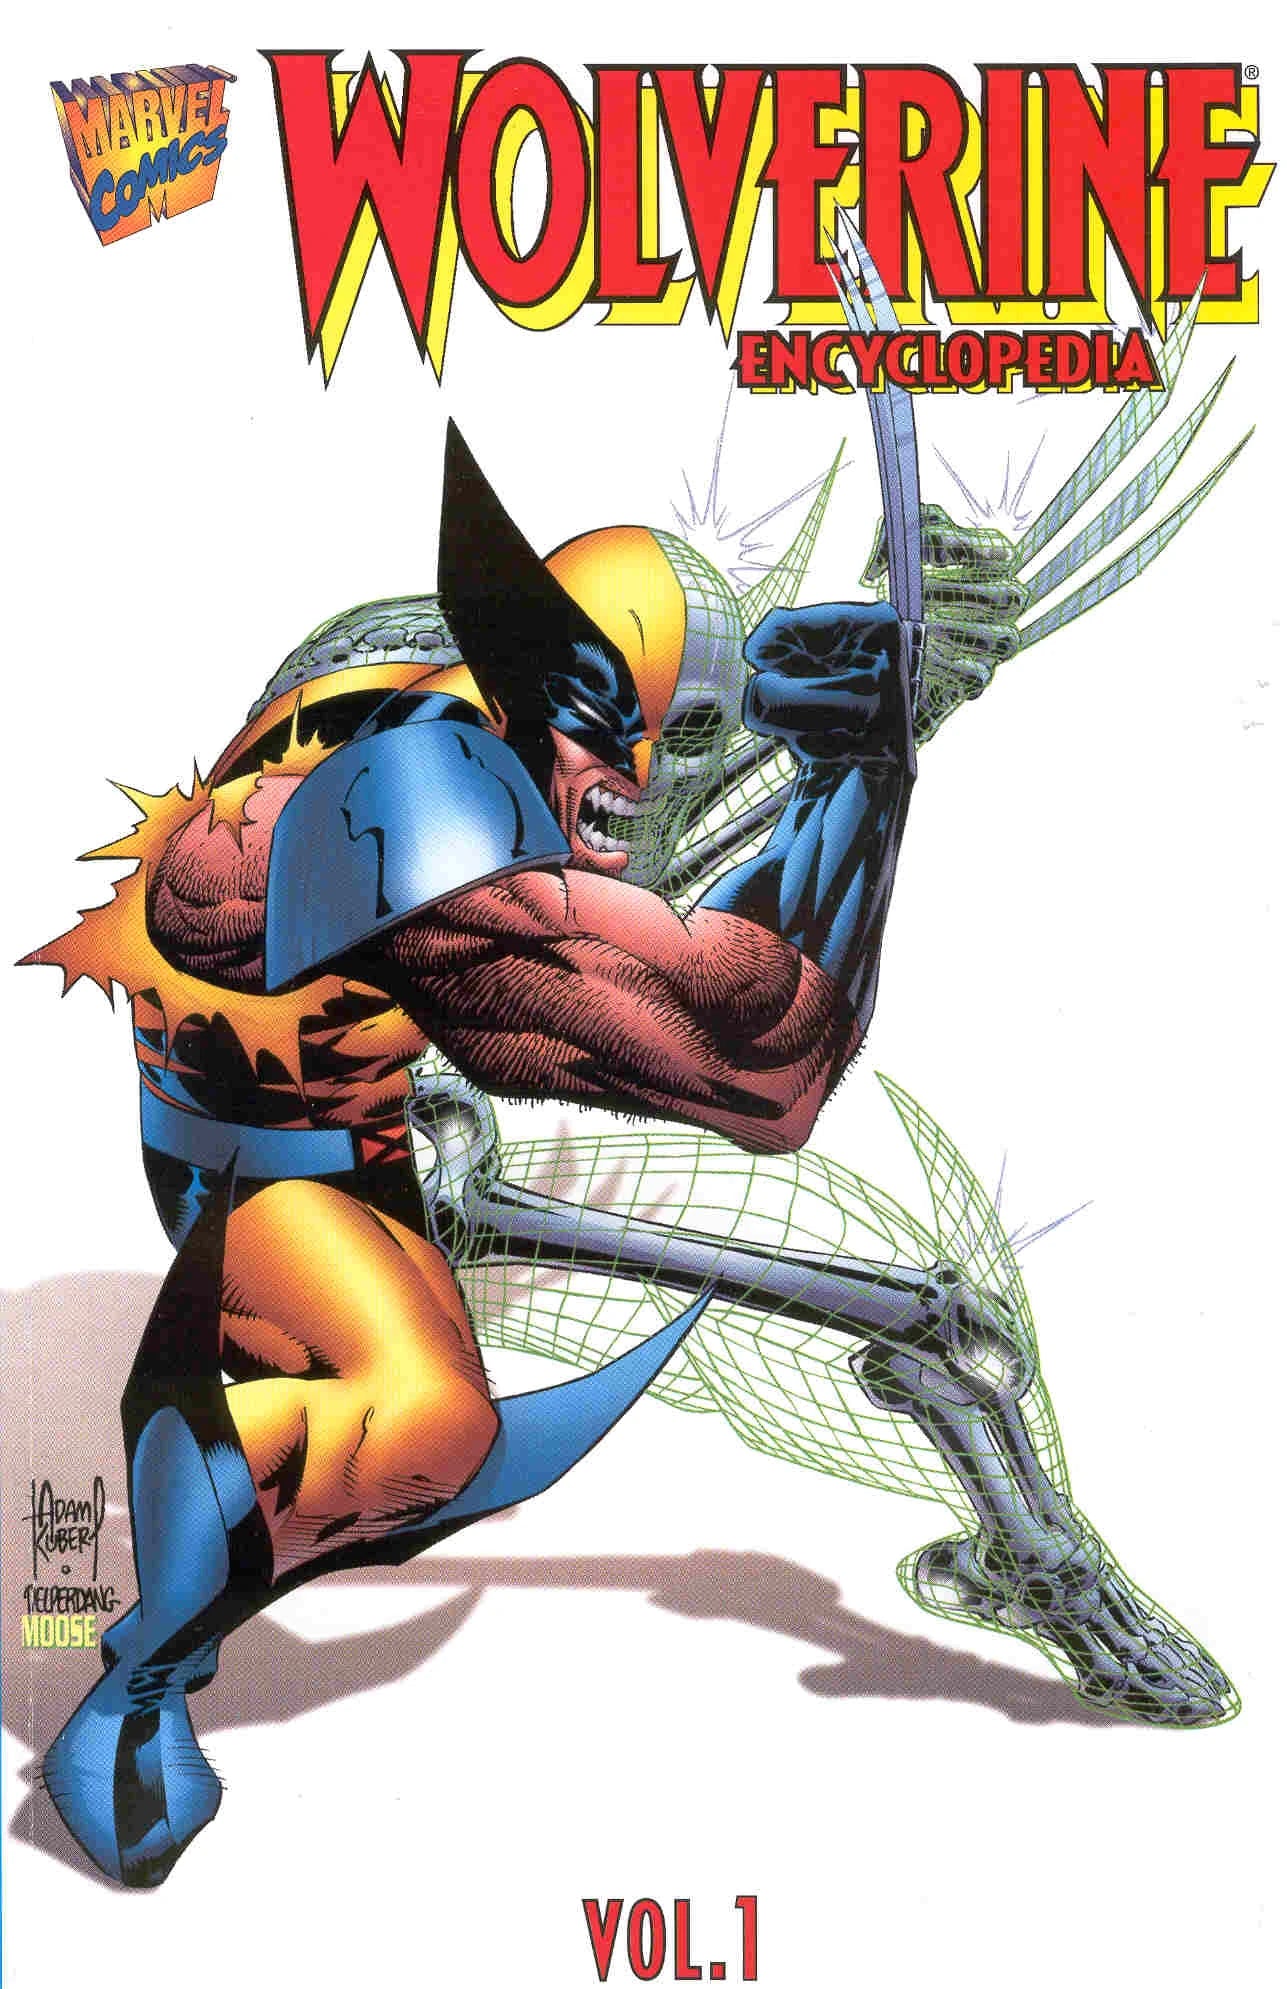 Wolverine Encyclopedia #1